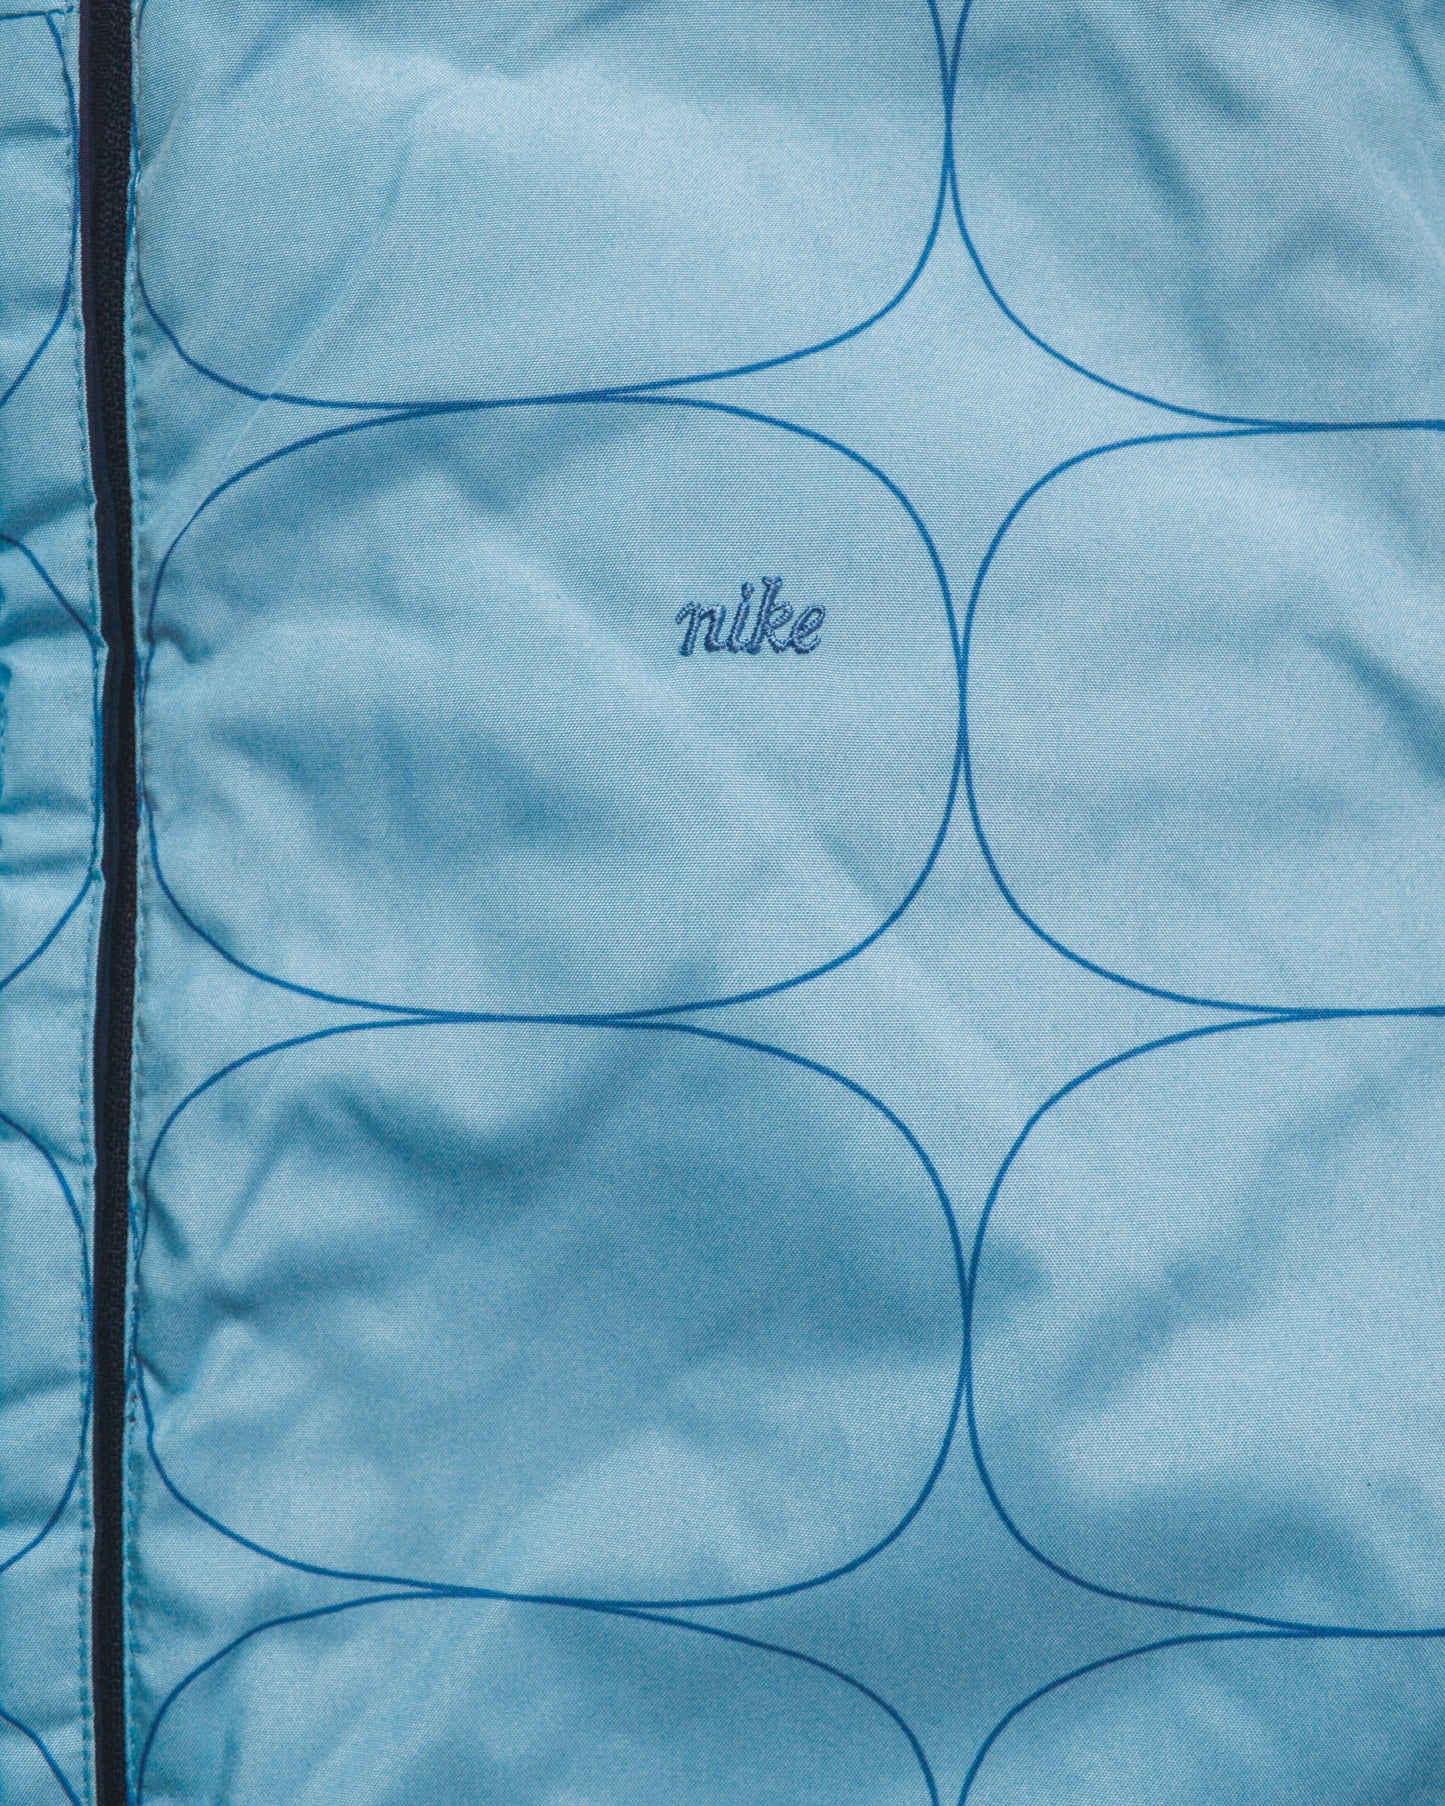 Nike Reversible Bubble Print Navy Blue Reversible Insulated Light Jacket (S~M)